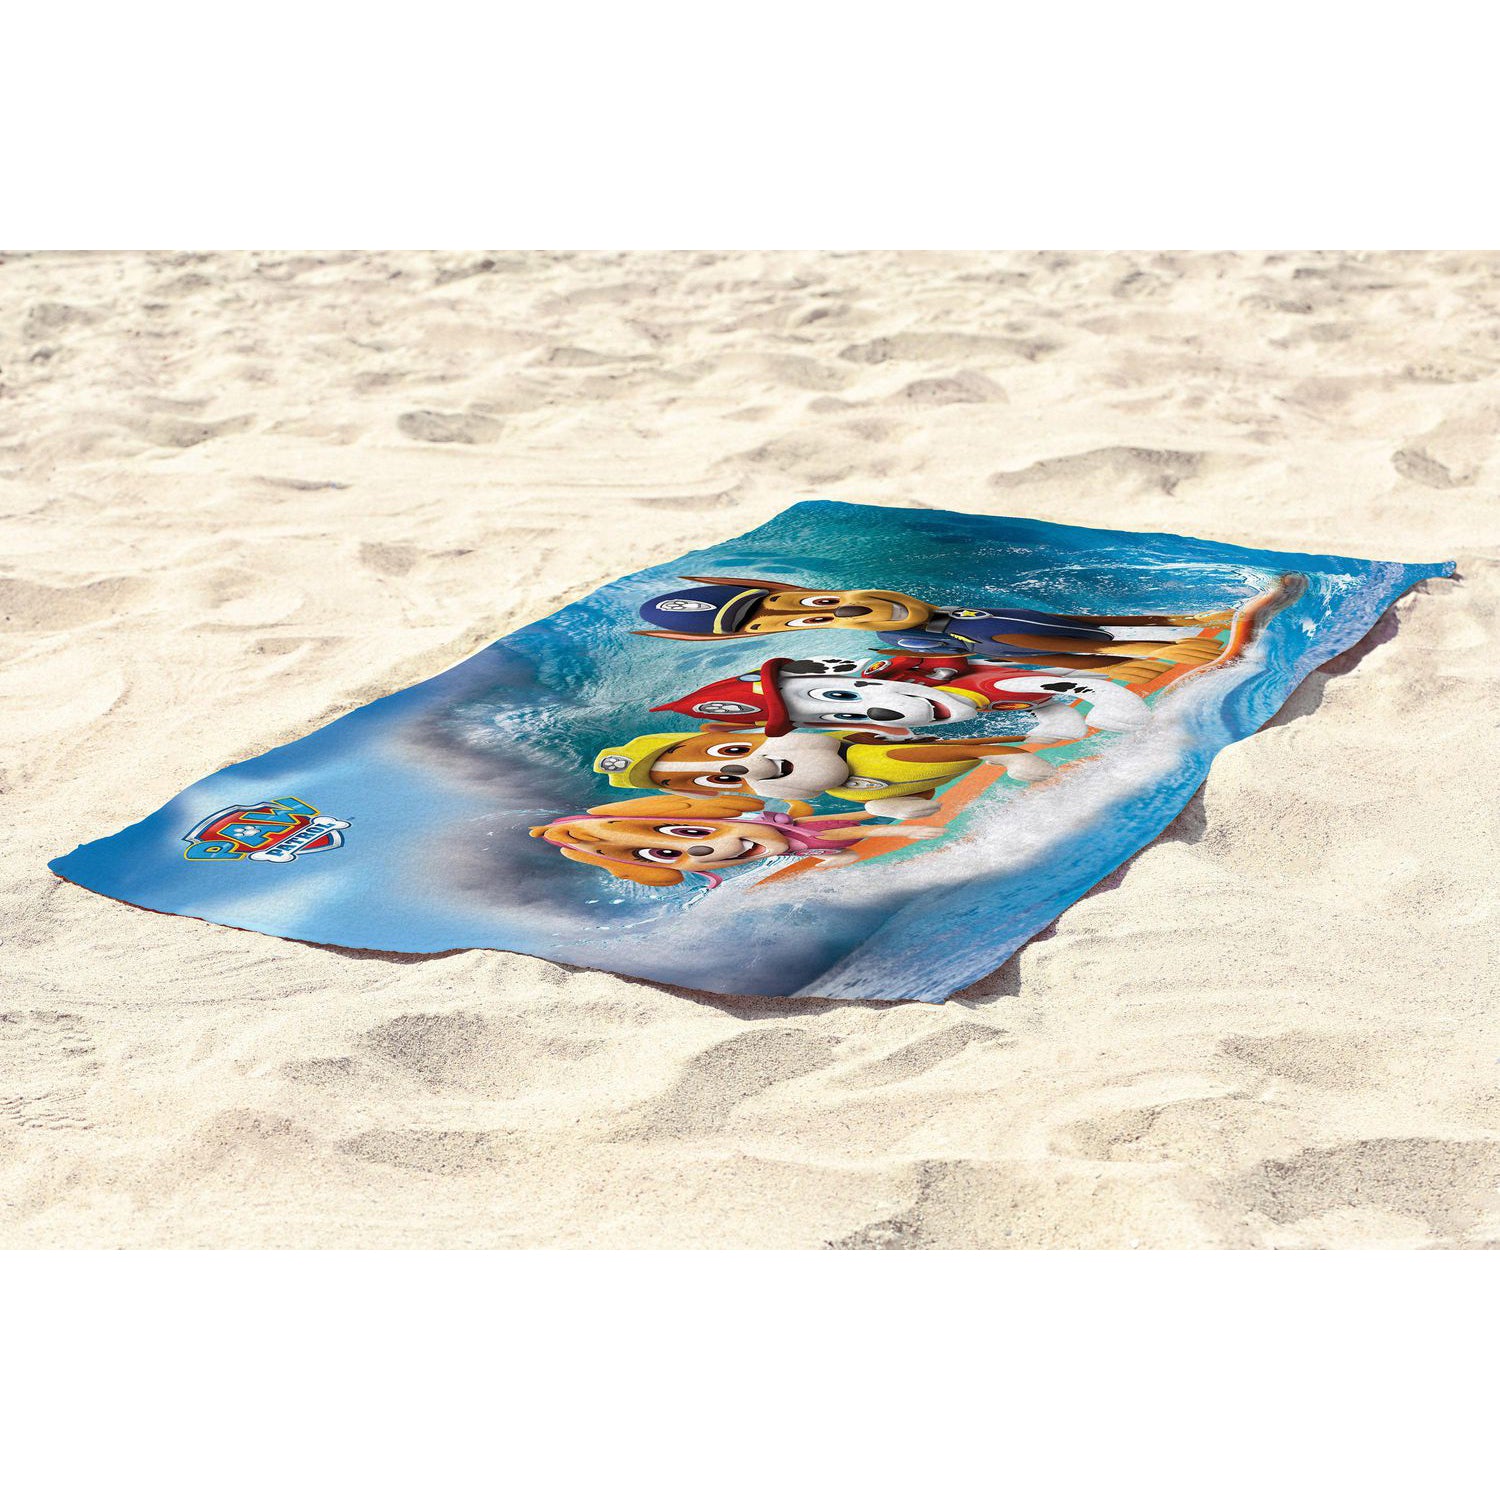 Paw Patrol "Making Safe Waves" Beach Towel